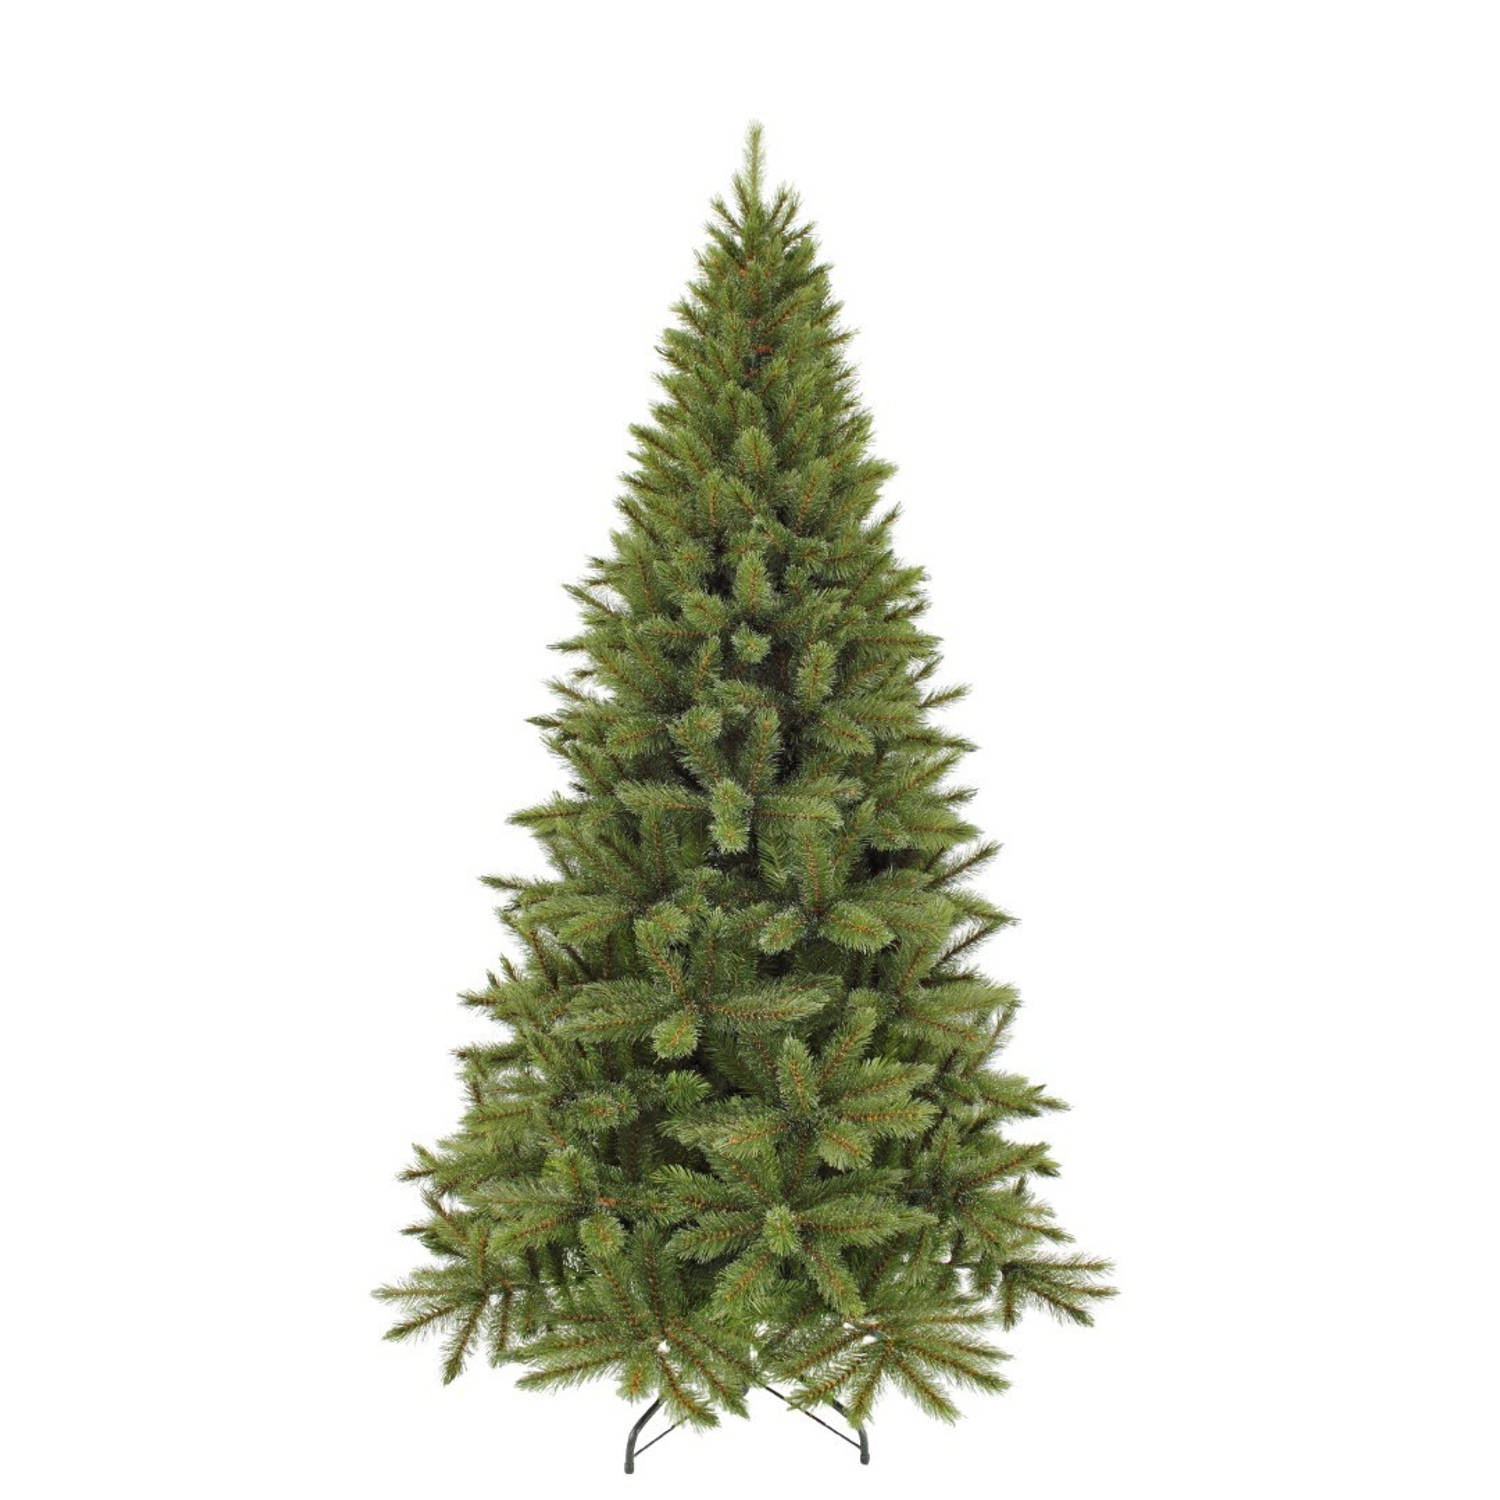 Triumph Tree - Forest Frosted Pine kunstkerstboom groen d130 h230 cm